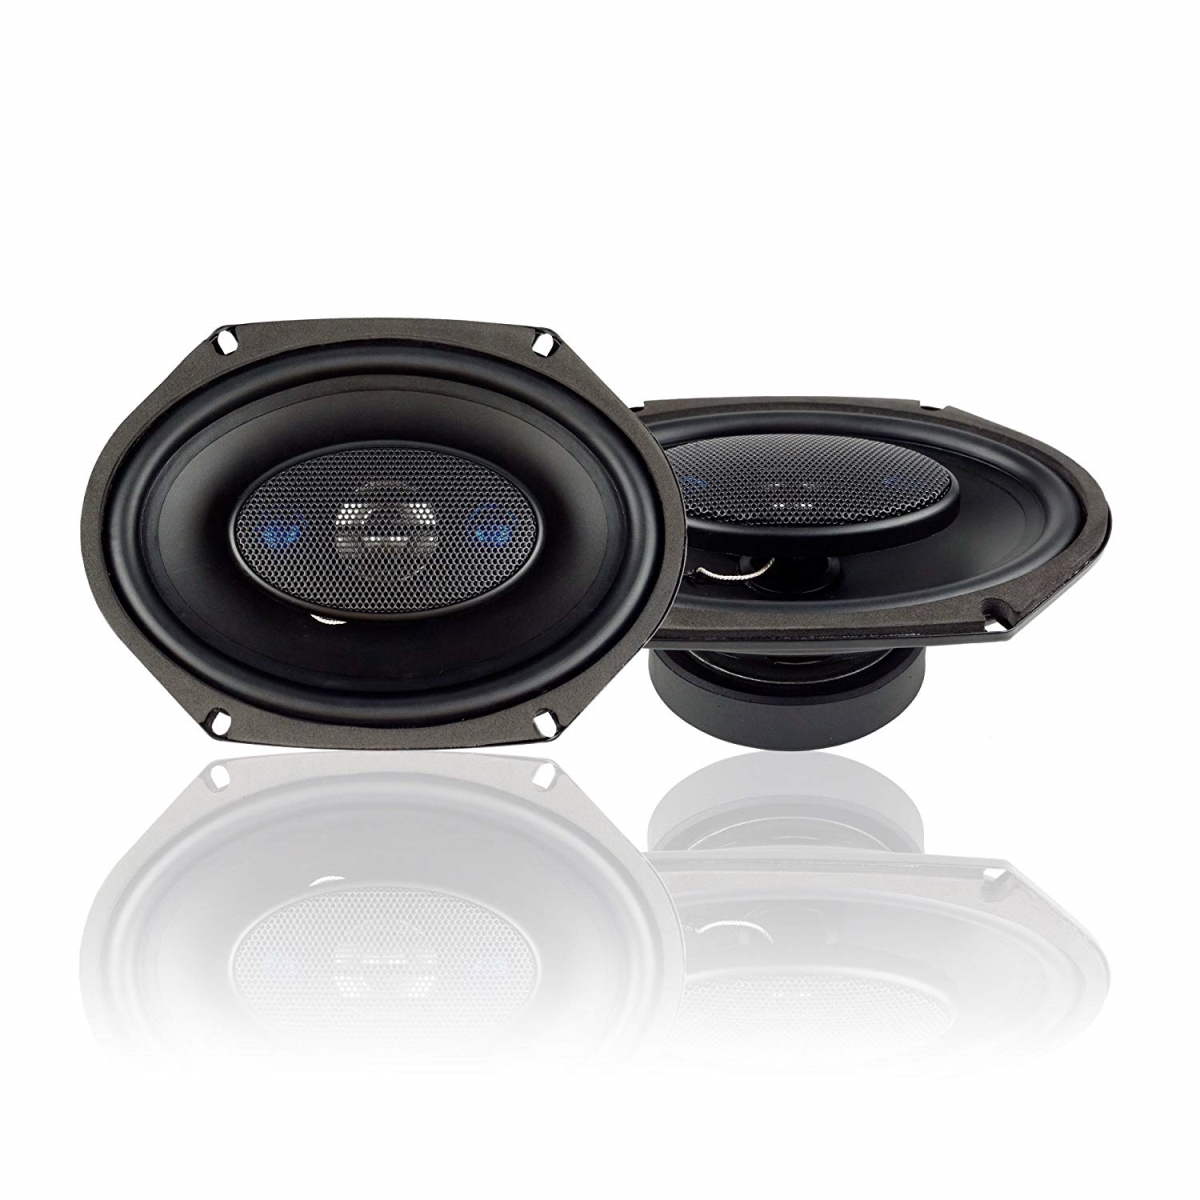 Picture of Blaupunkt GTX680 6 x 8 in. 300W Maximum 4-Way Speaker